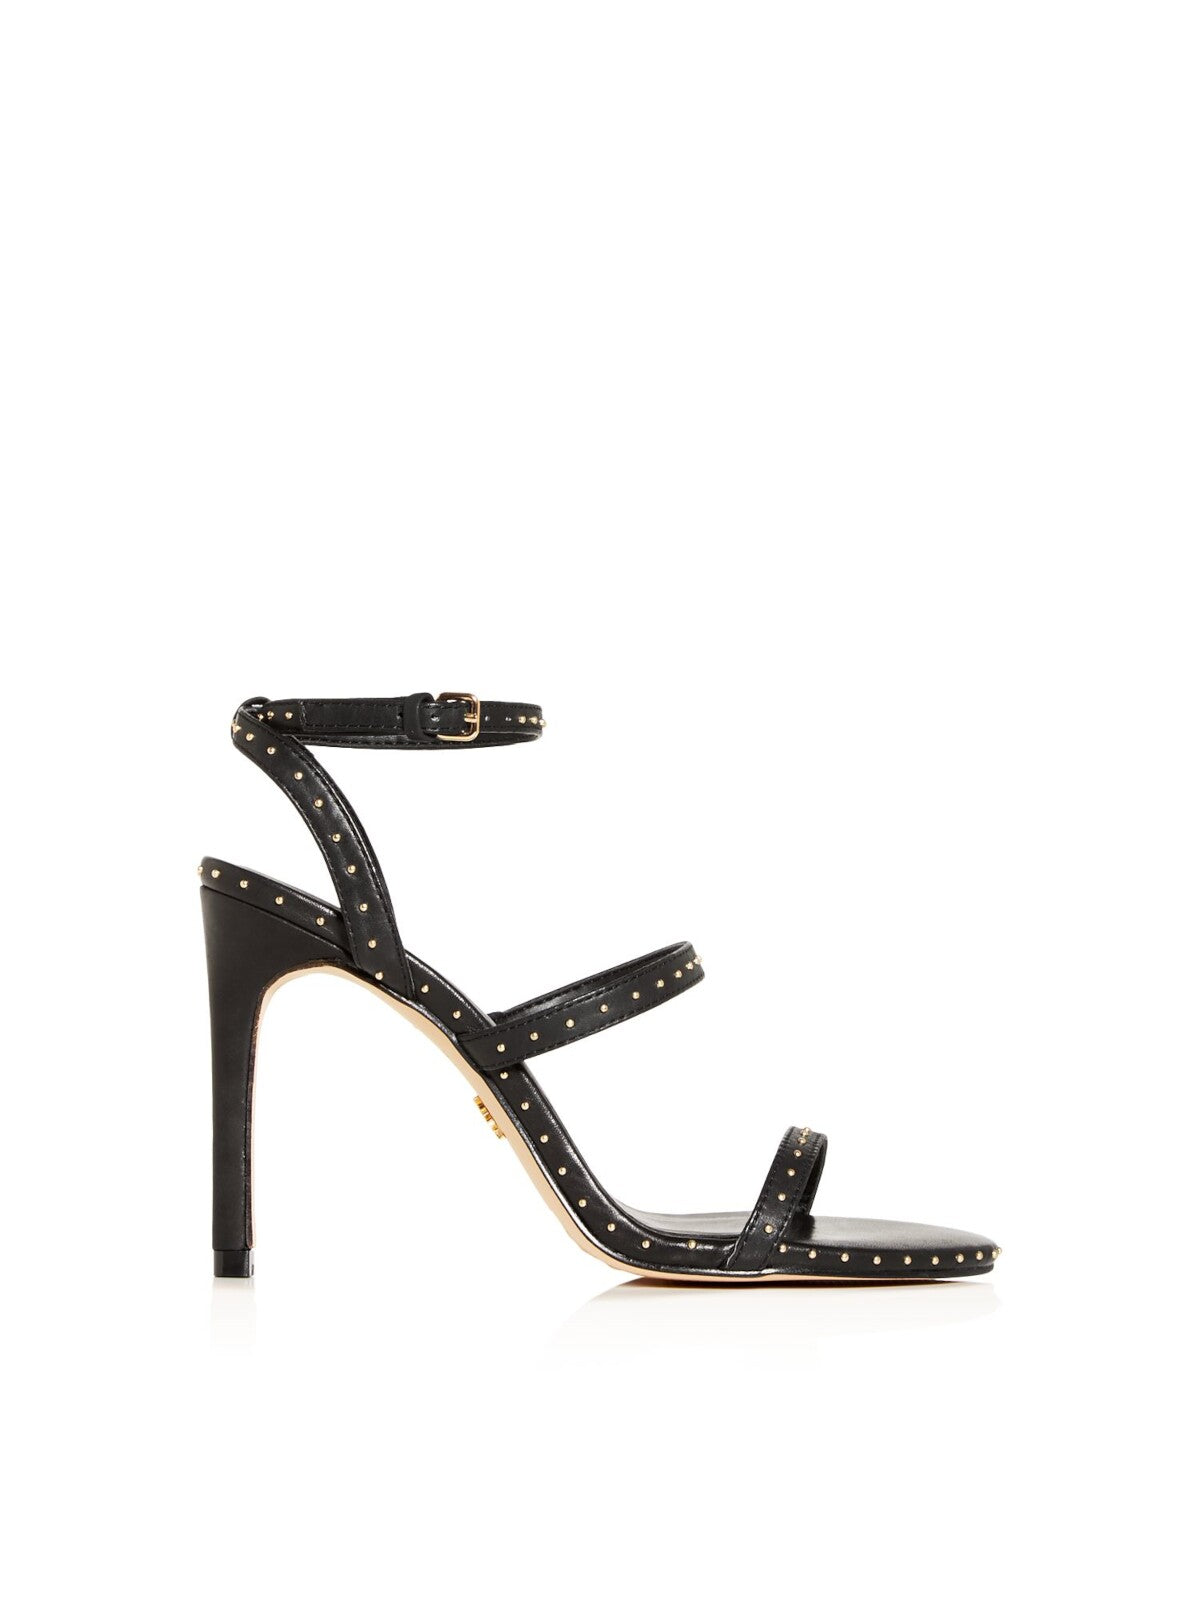 KURT GEIGER Womens Black Ankle Strap Studded Portia Round Toe Stiletto Buckle Leather Dress Sandals Shoes 36.5